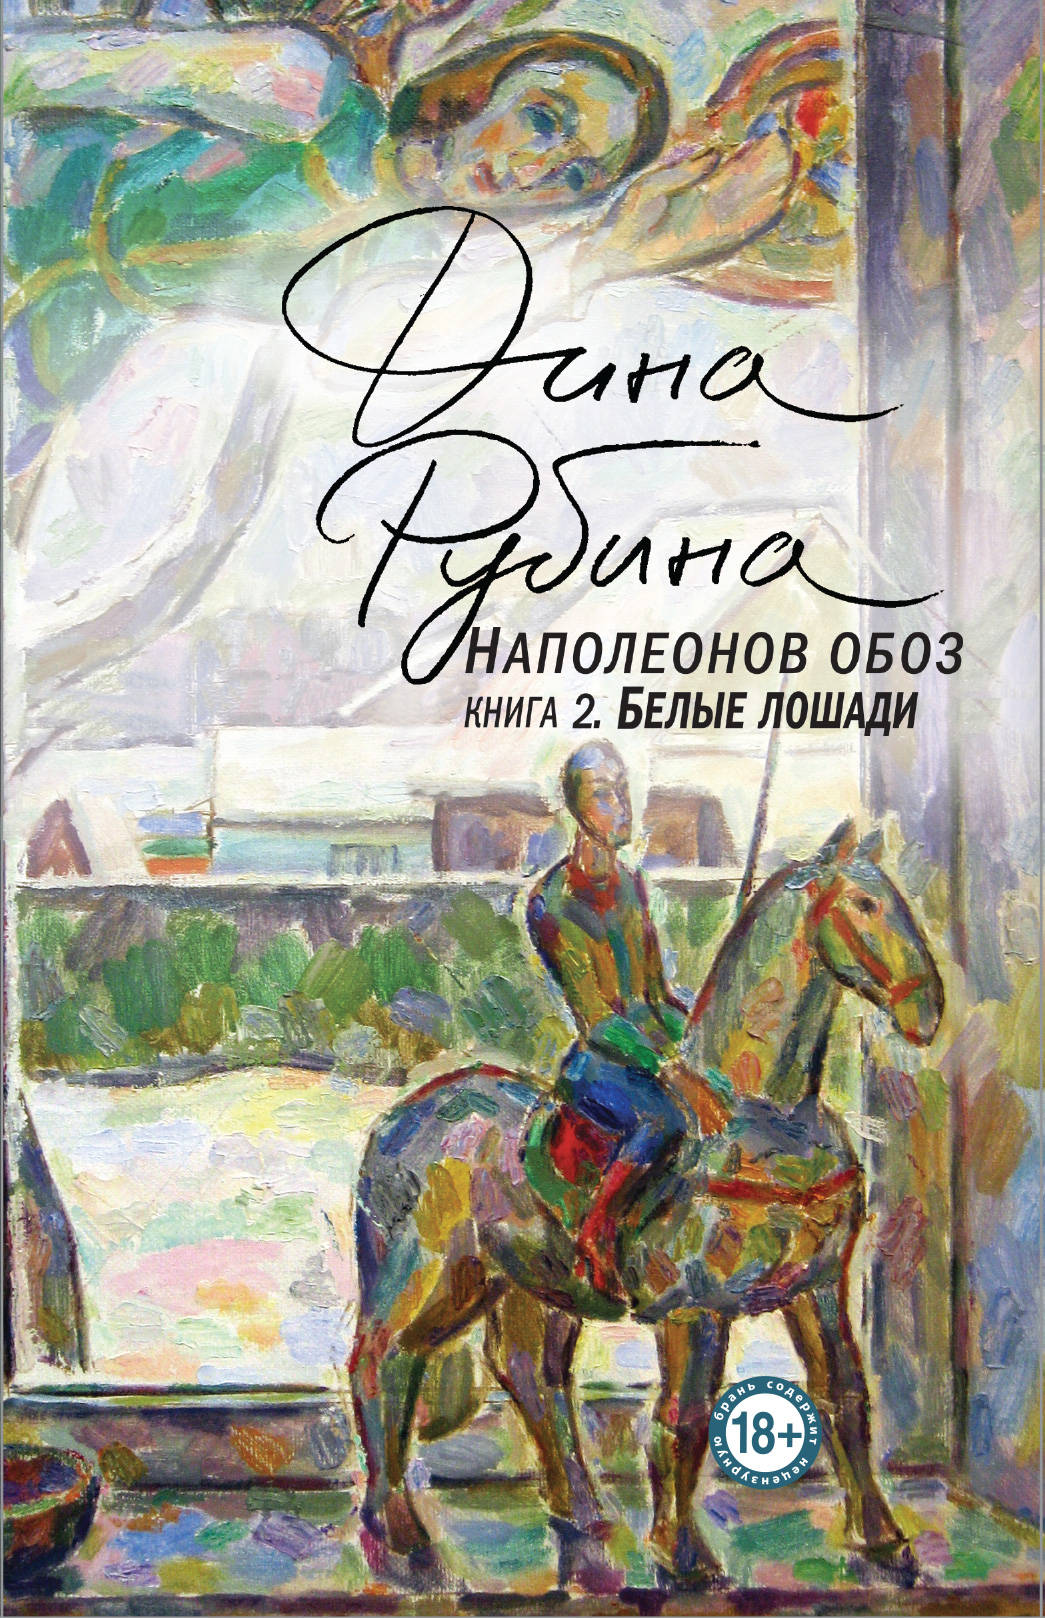 Book “Наполеонов обоз. Книга 2. Белые лошади” by Дина Рубина